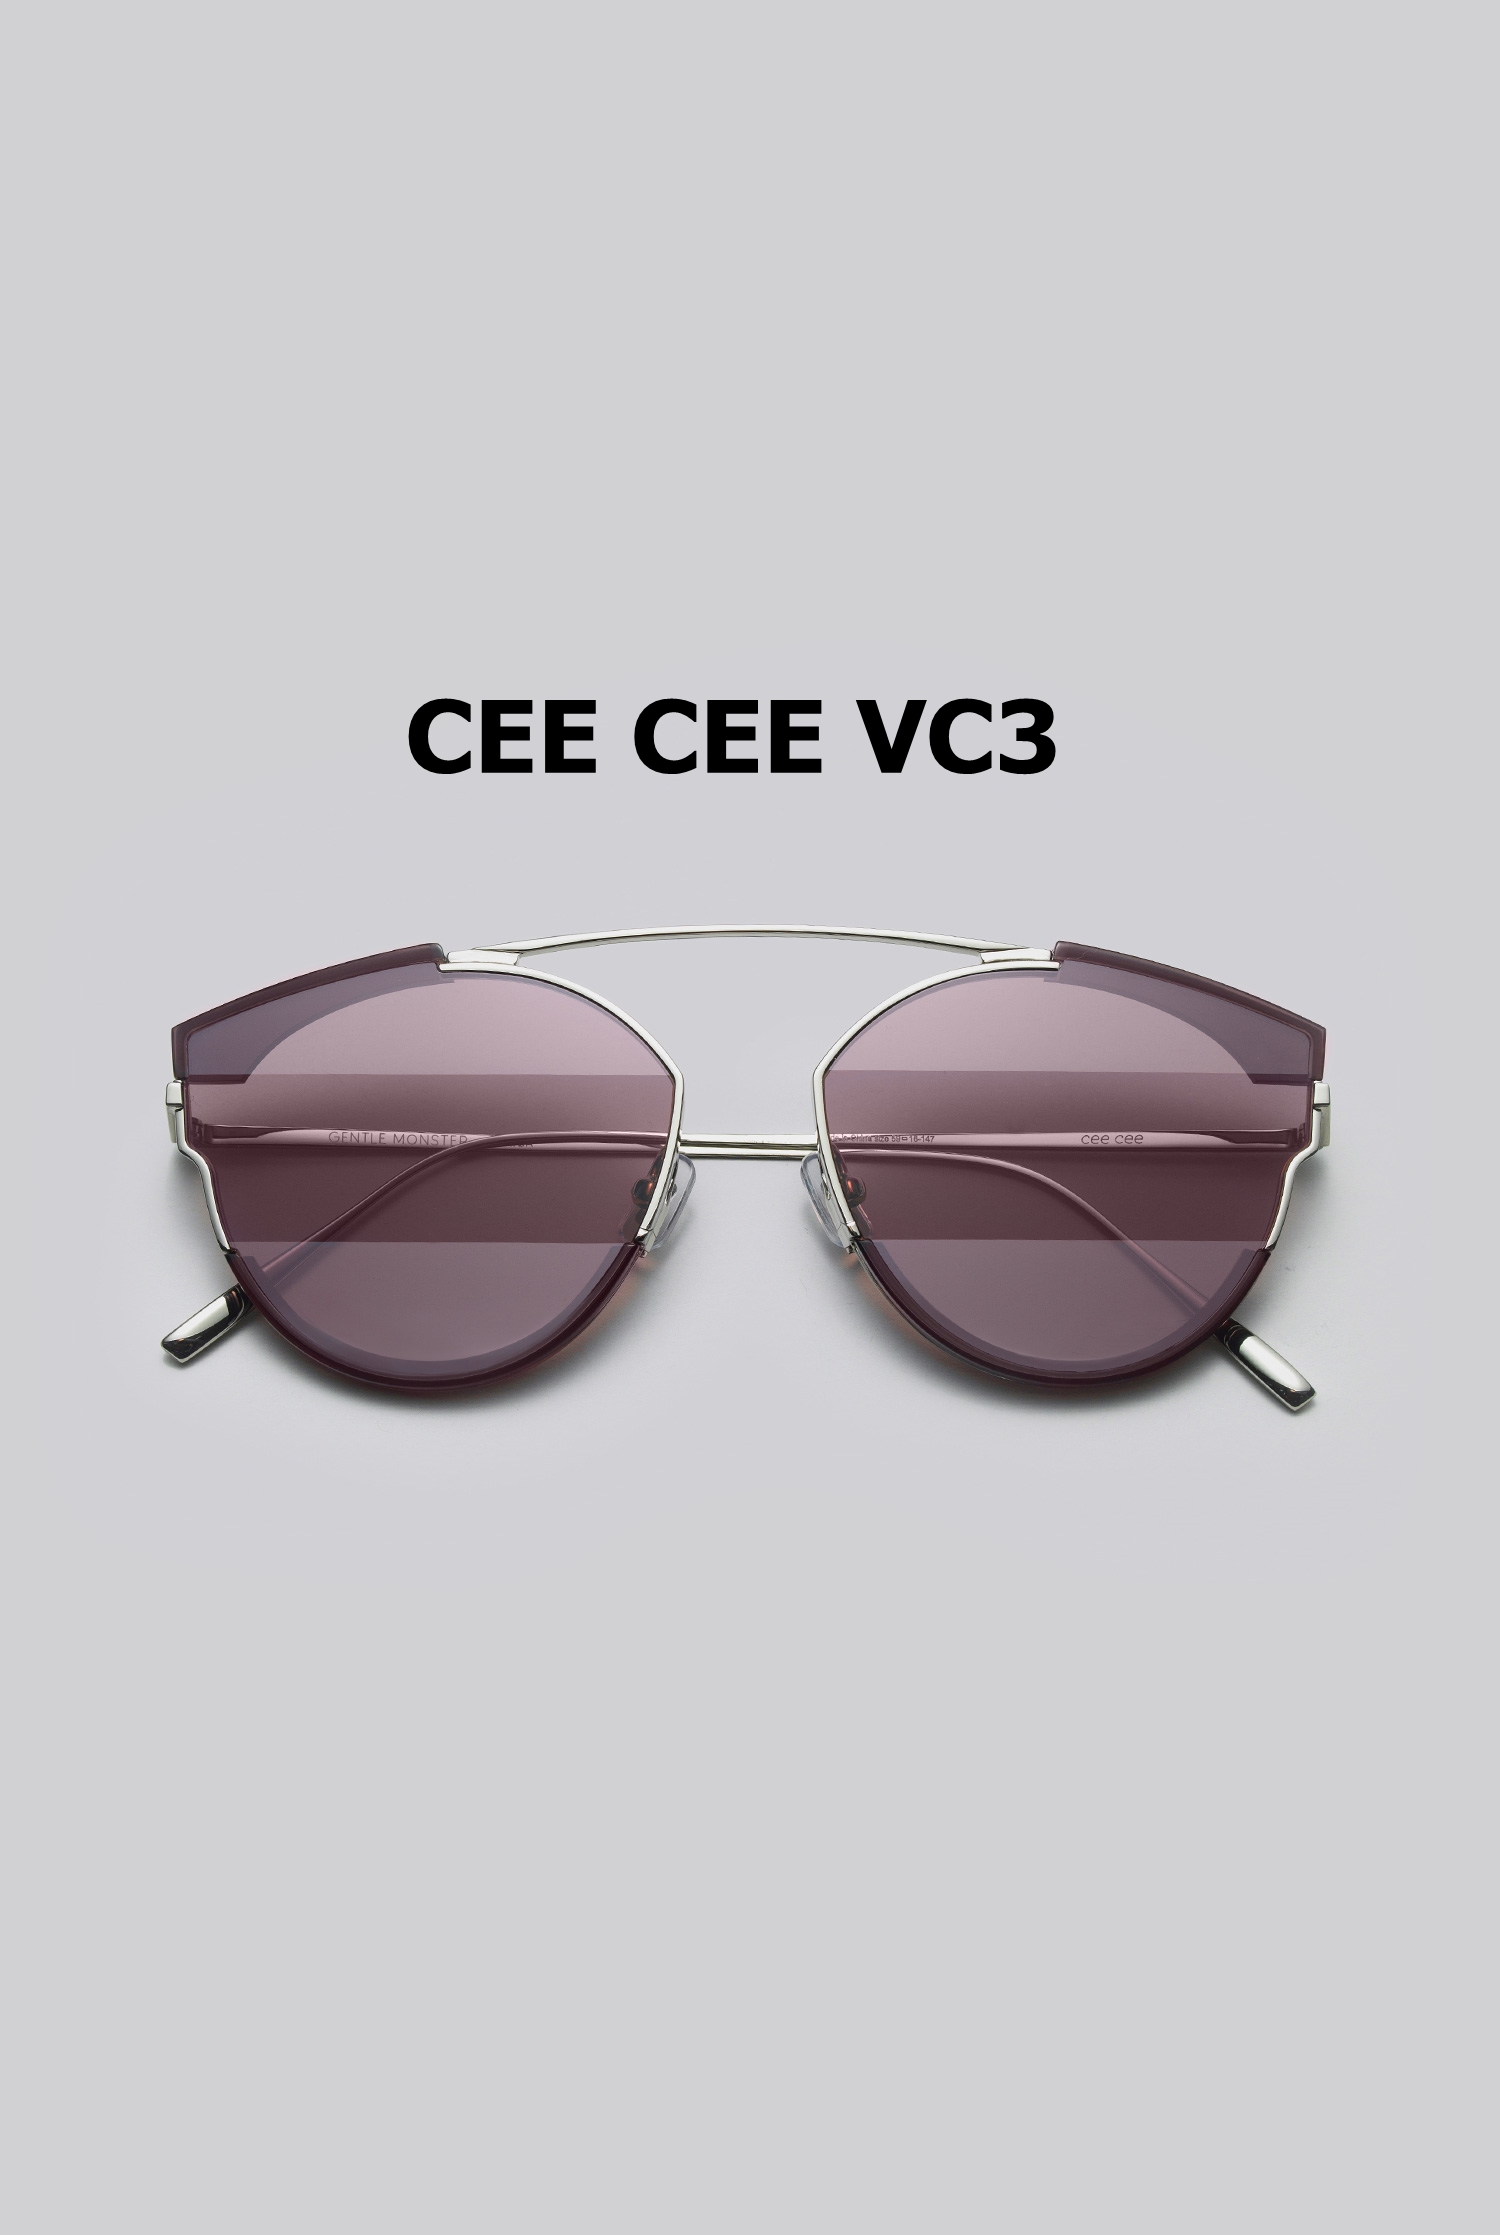 CEE CEE VC3 